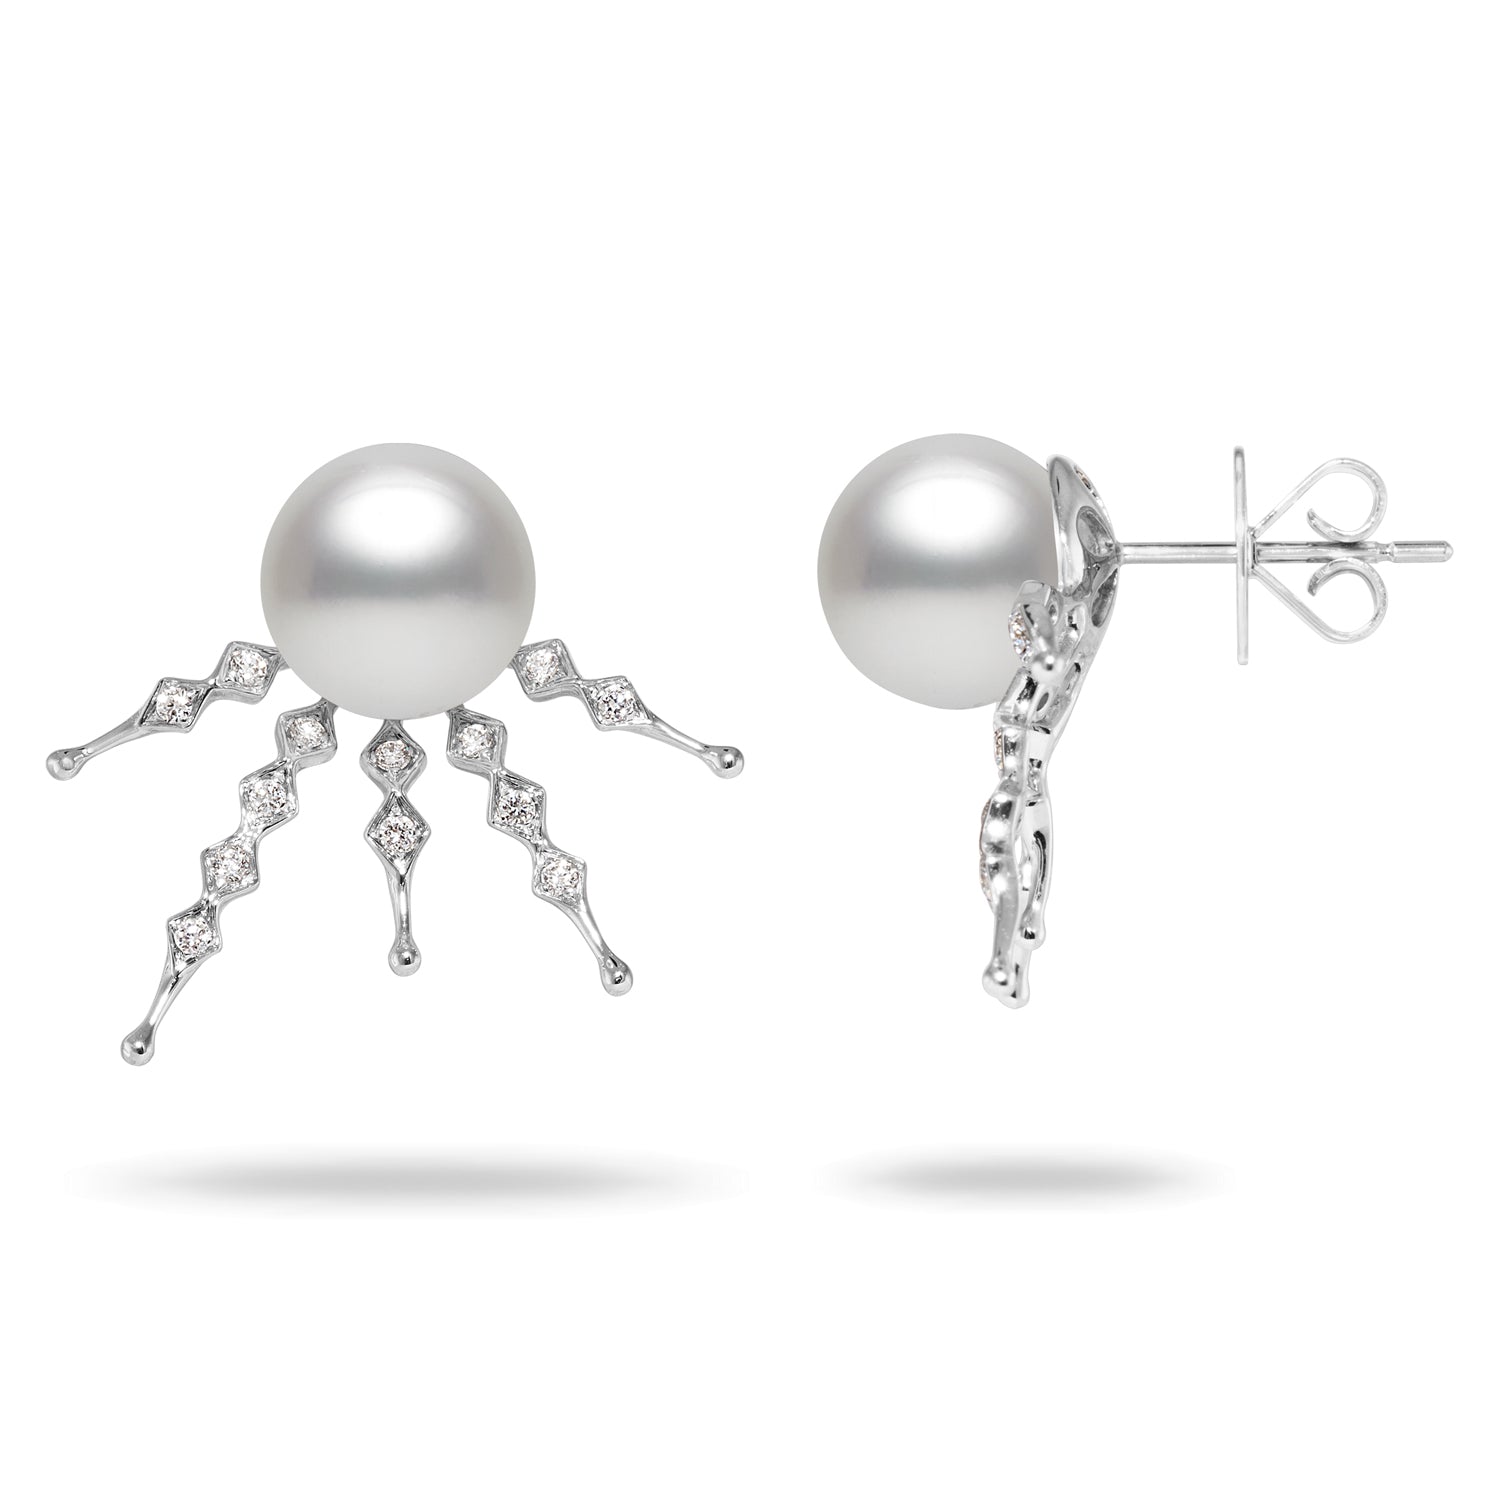 10-11mm White South Sea Pearl and Diamond Earrings